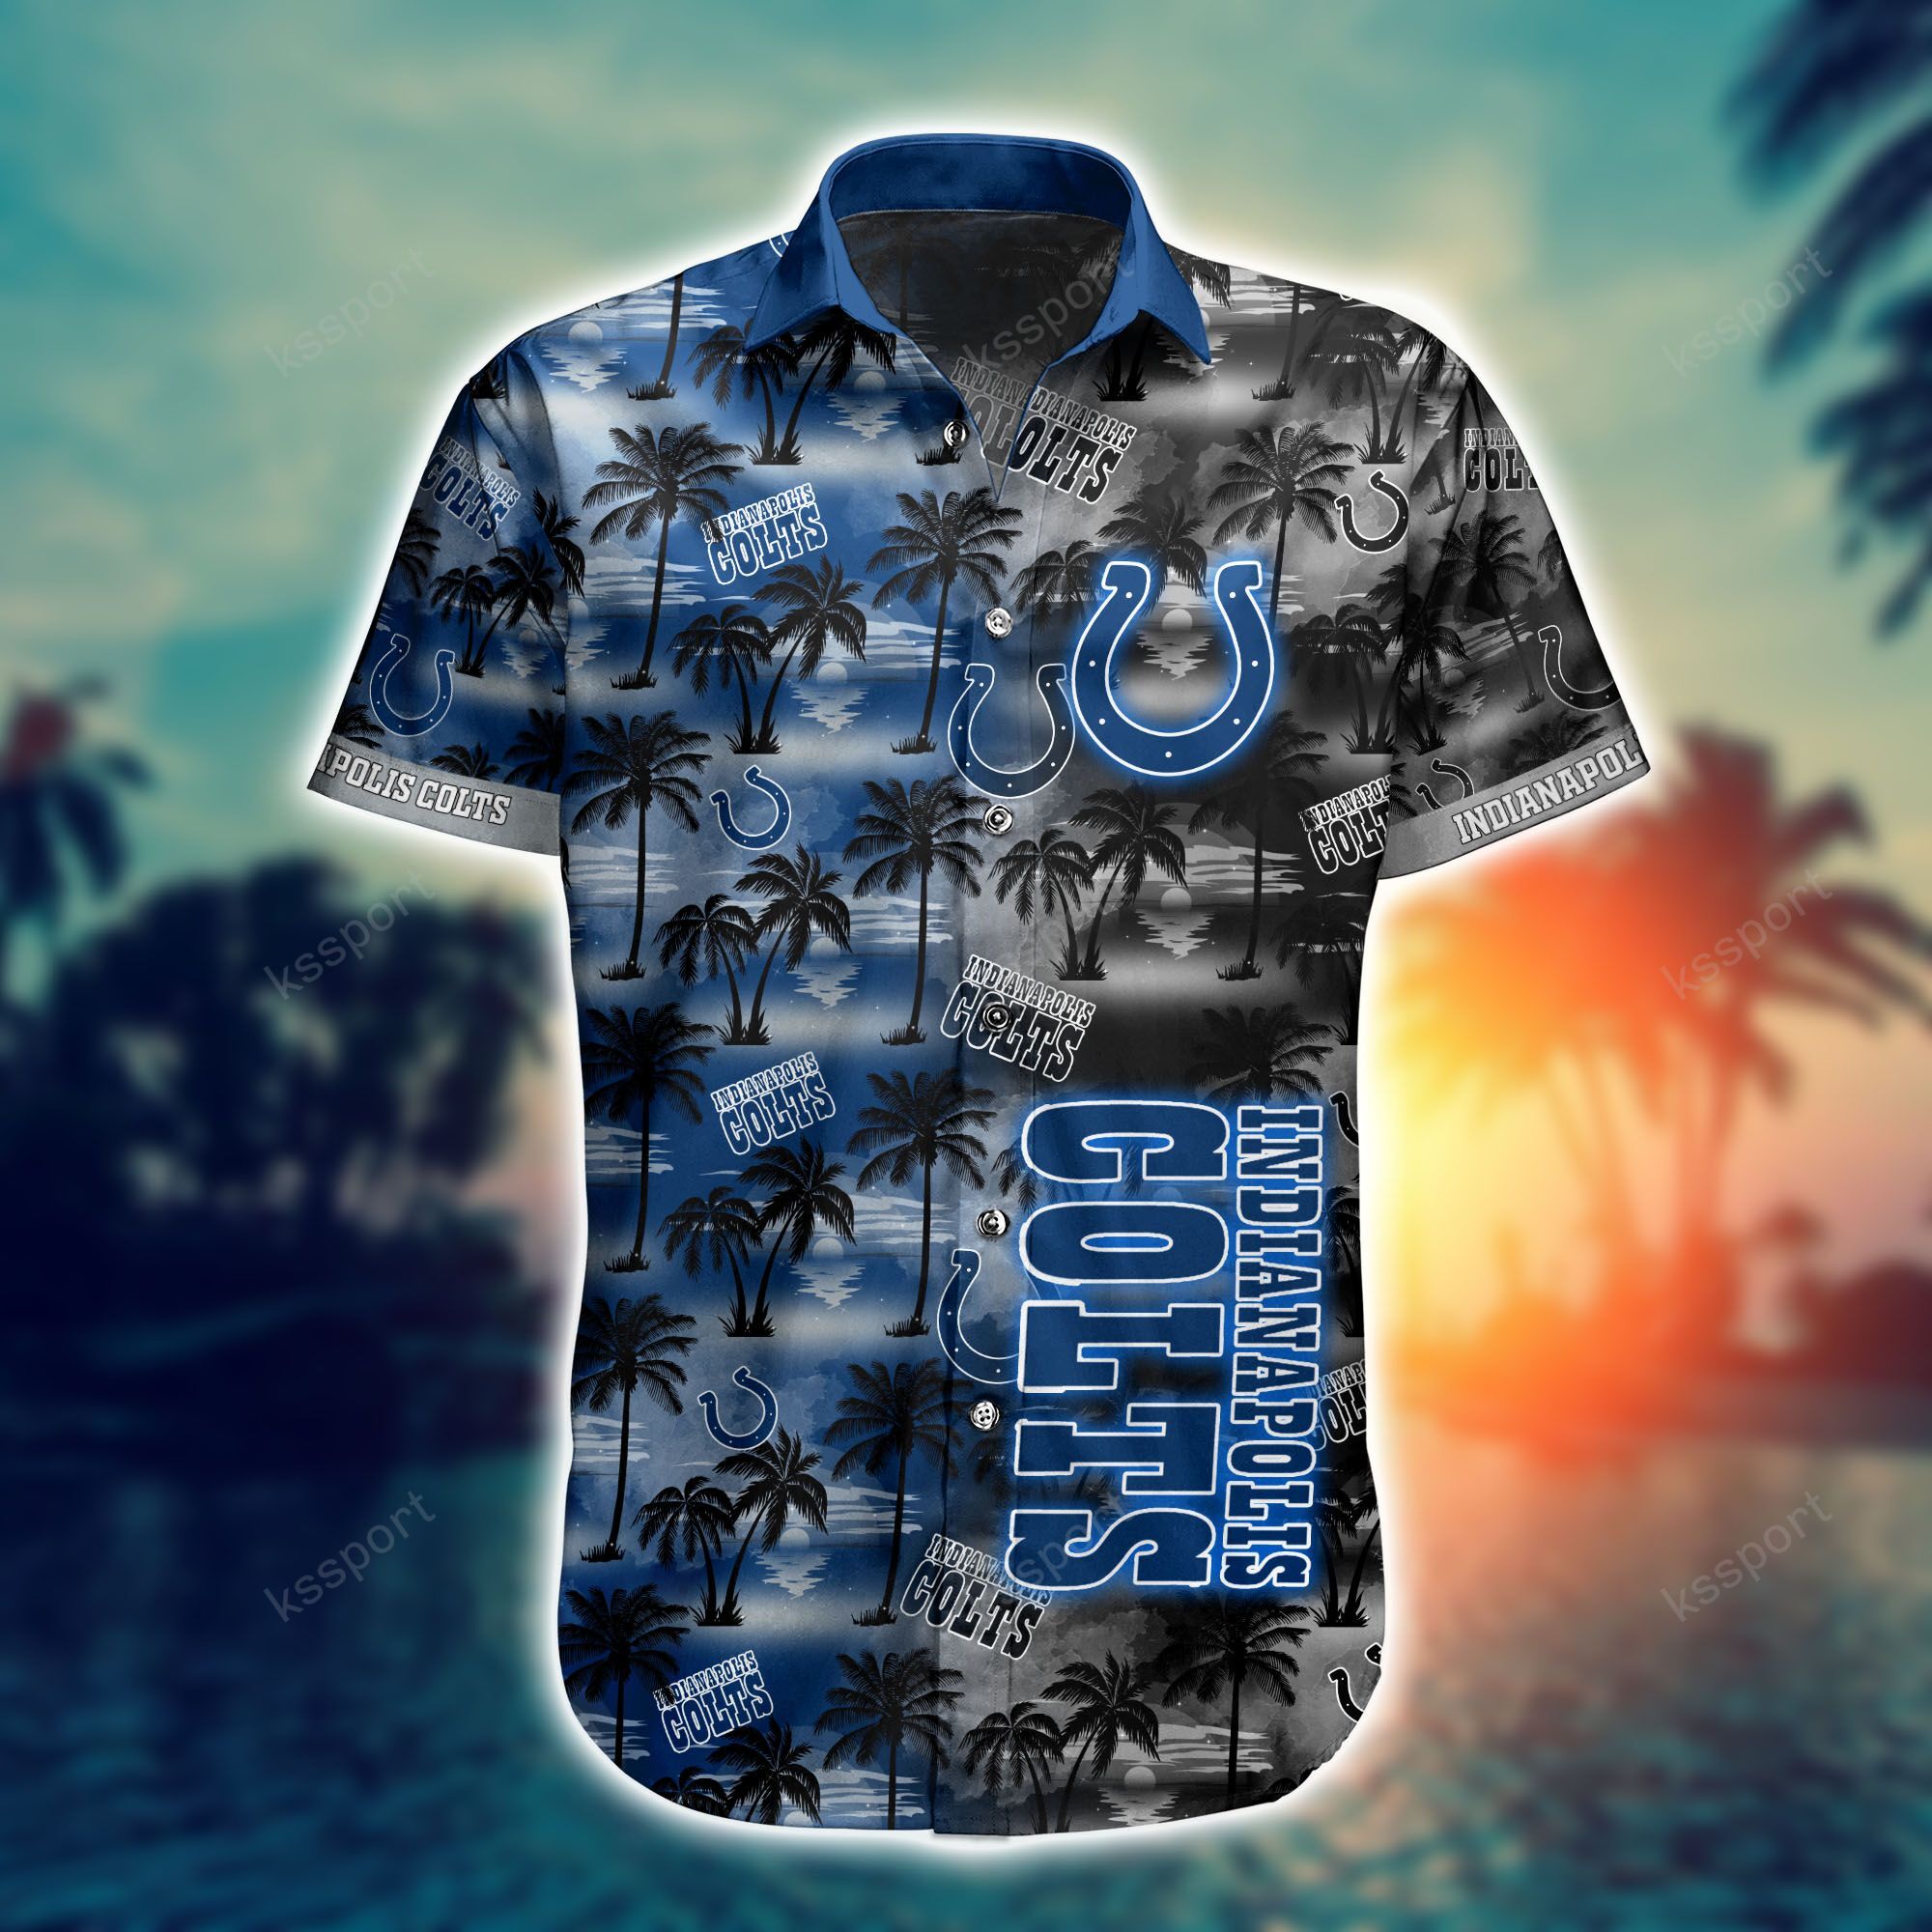 Hawaiian shirt and shorts is a great way to look stylish at a beach party 31